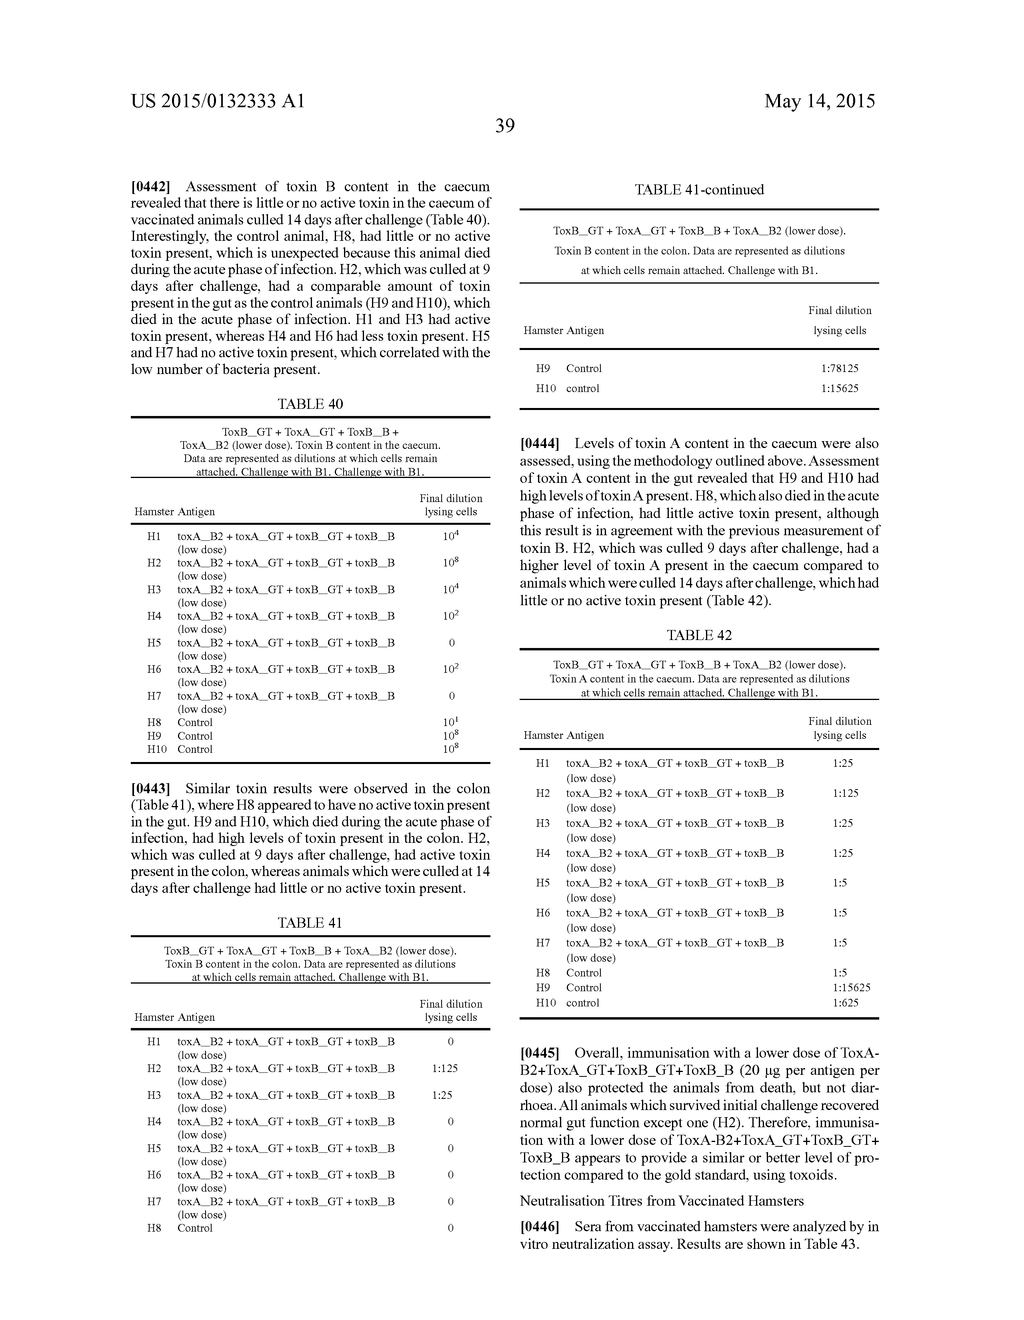 CLOSTRIDIUM DIFFICILE TOXIN-BASED VACCINE - diagram, schematic, and image 105